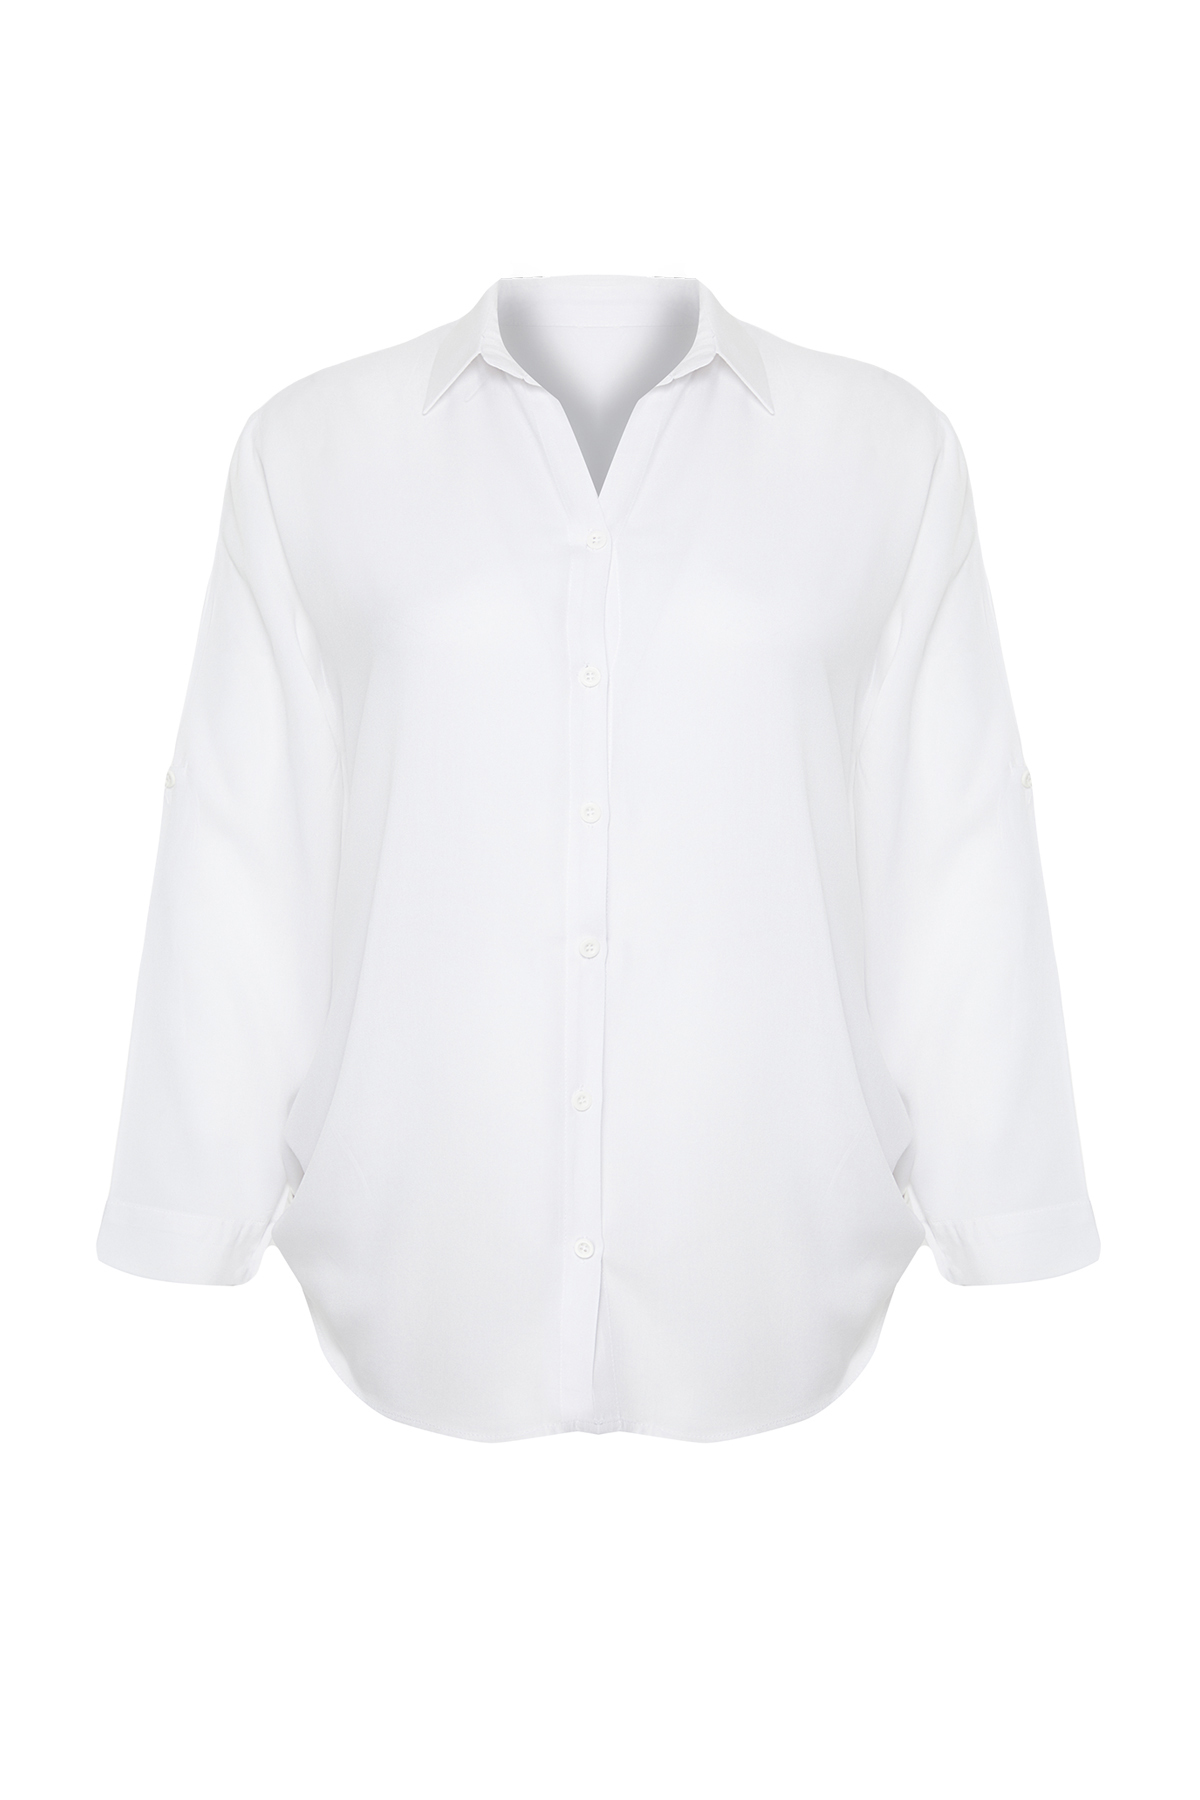 Trendyol Curve White Basic Oversize Woven Shirt